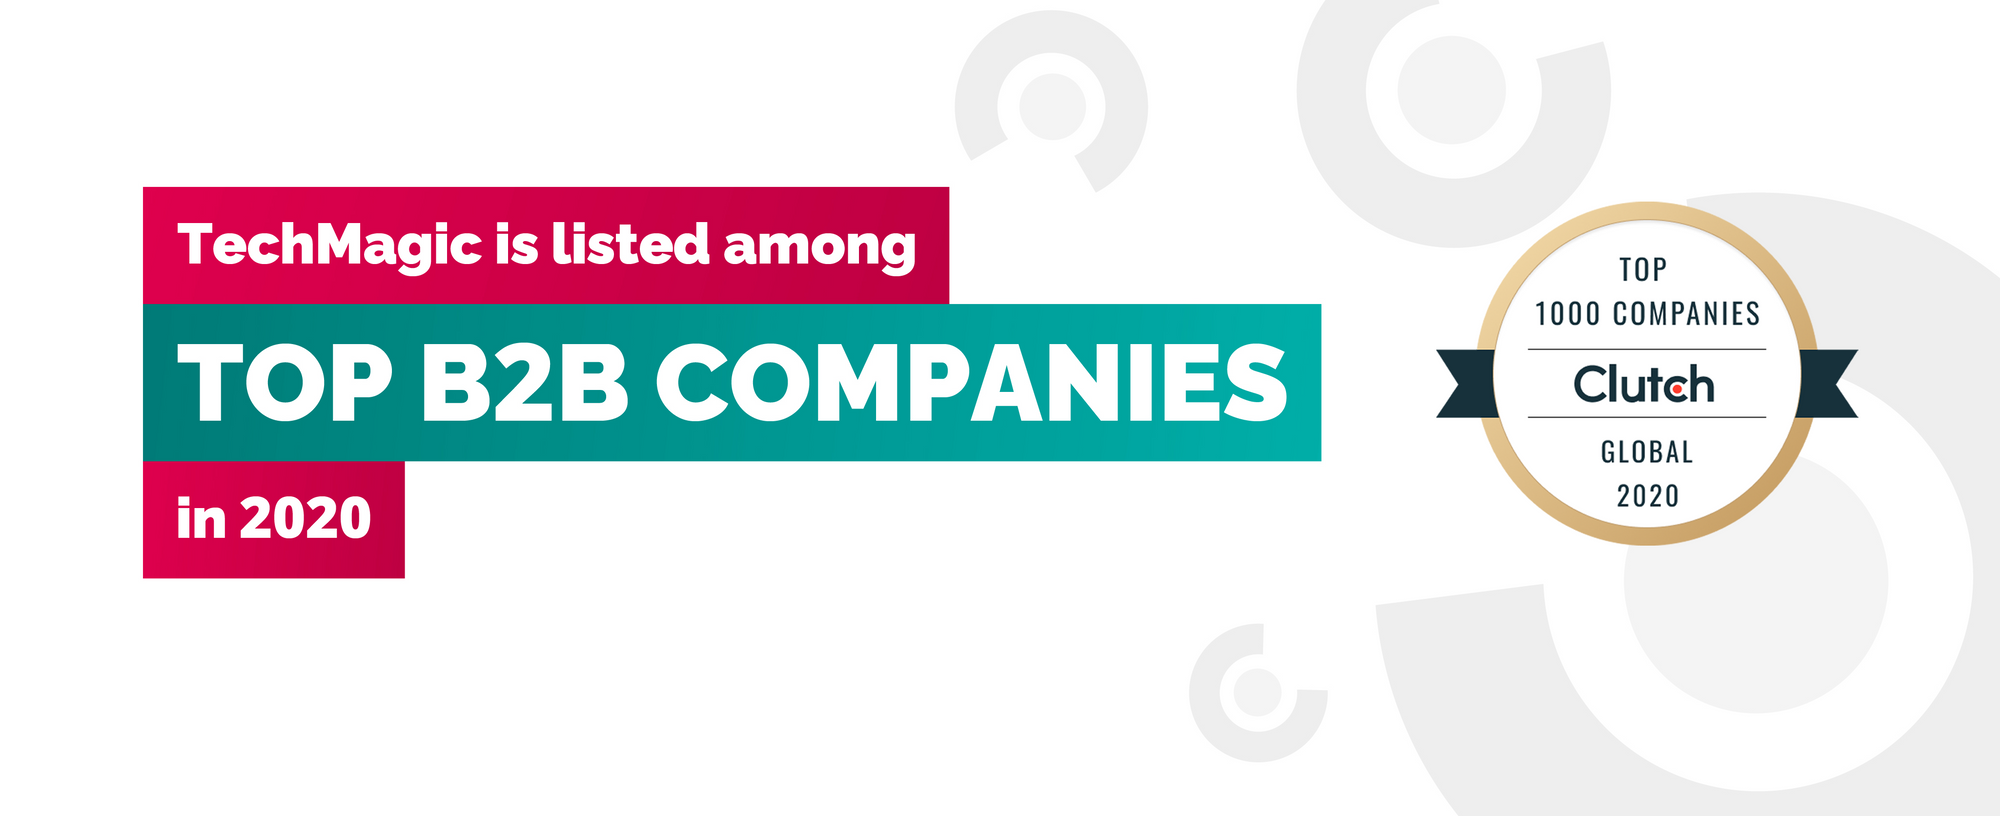 TechMagic is listed among Top B2B Companies in 2020